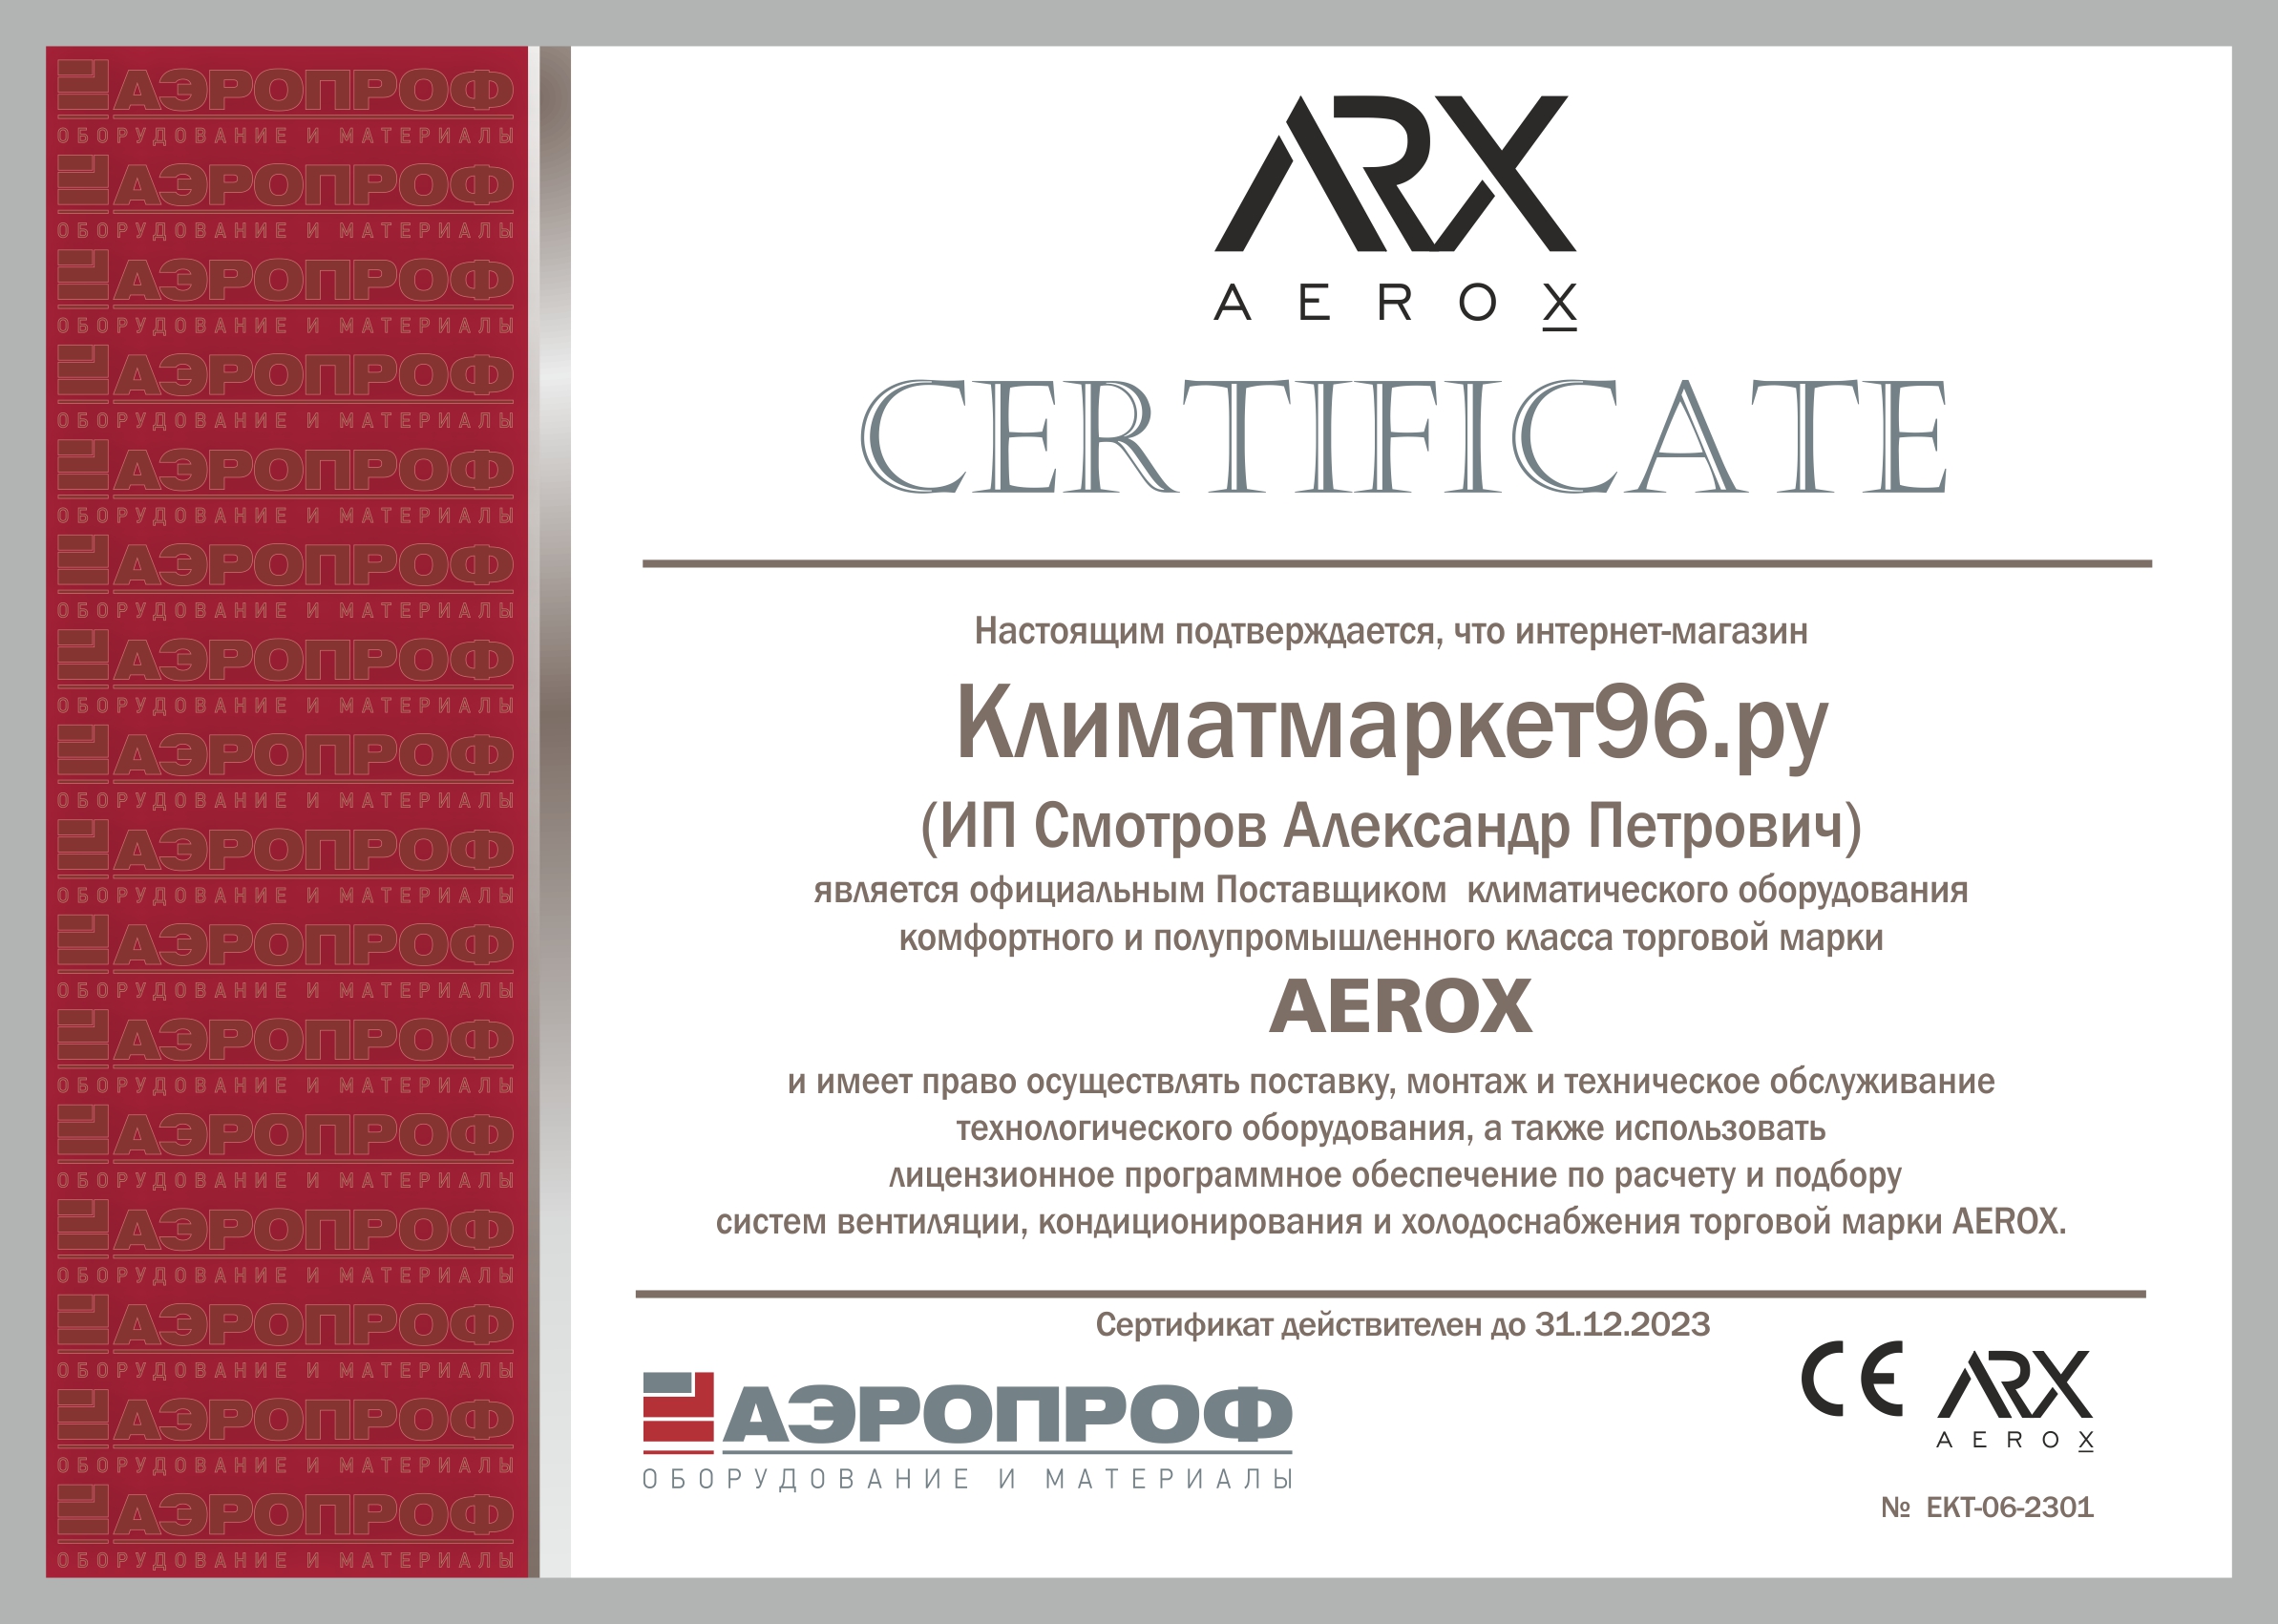 sert23-km96-arx Kondicioner Aero ALRS-09IH3A-02/ALRS-09OH3A-02 kypit v Ekaterinbyrge v internet-magazine KlimatMarket96.ry Сертификат официального дилера